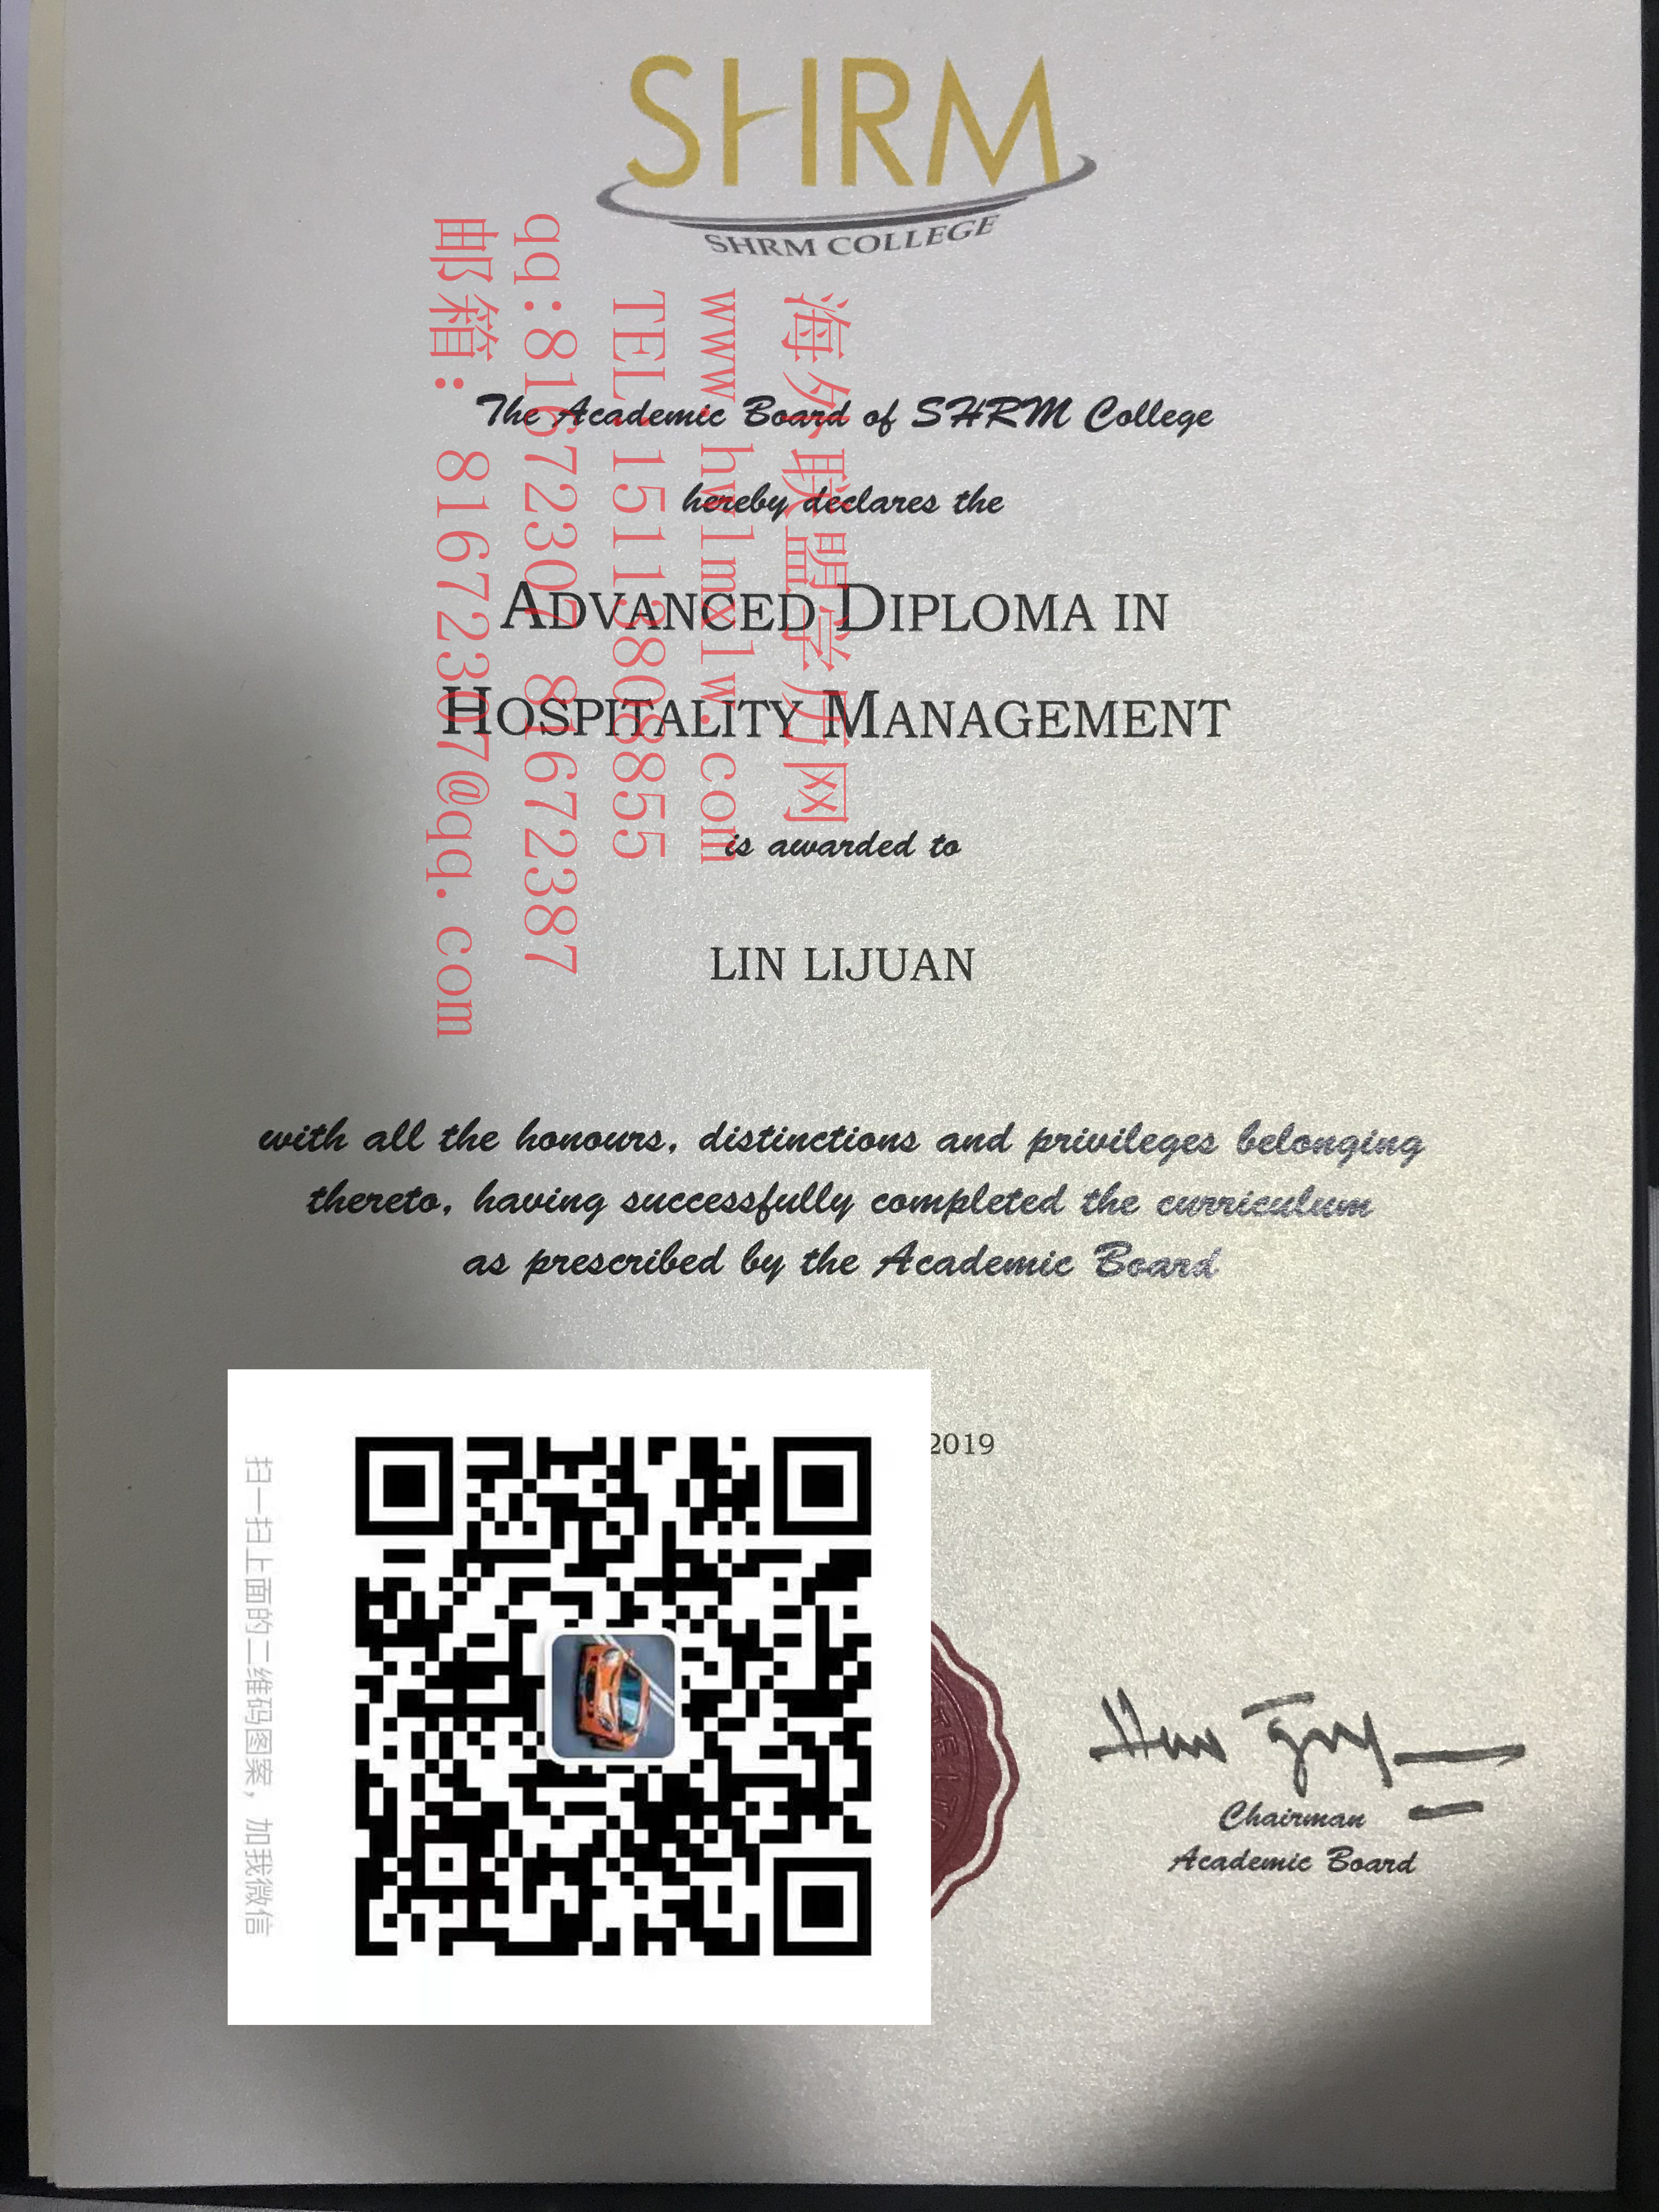 SHRM COLLEGE Diploma Certificate